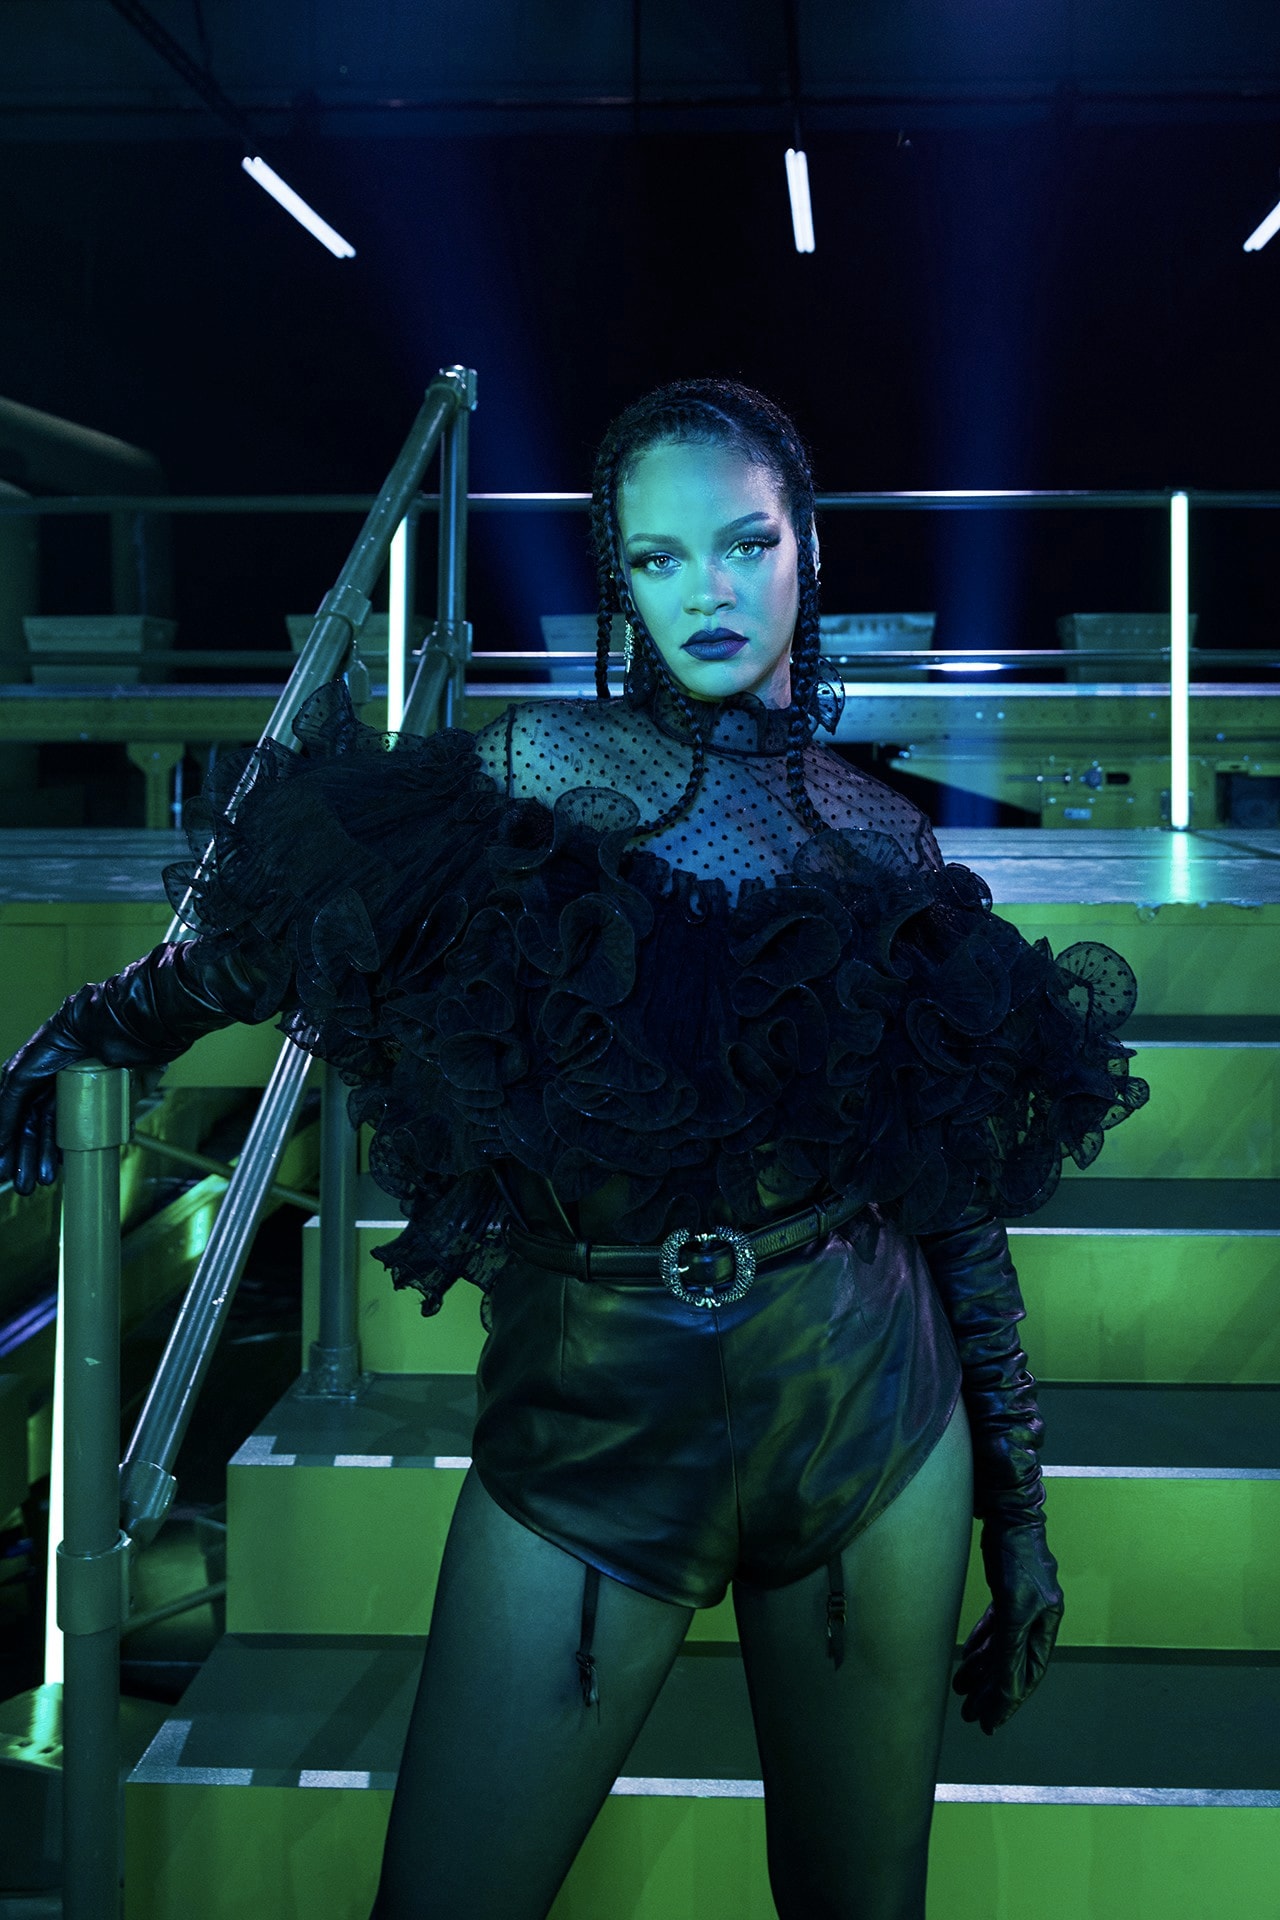 Rihanna Savage X Fenty Show Diversity Body Types Skin Types Models Beauty INdustry Fashion 